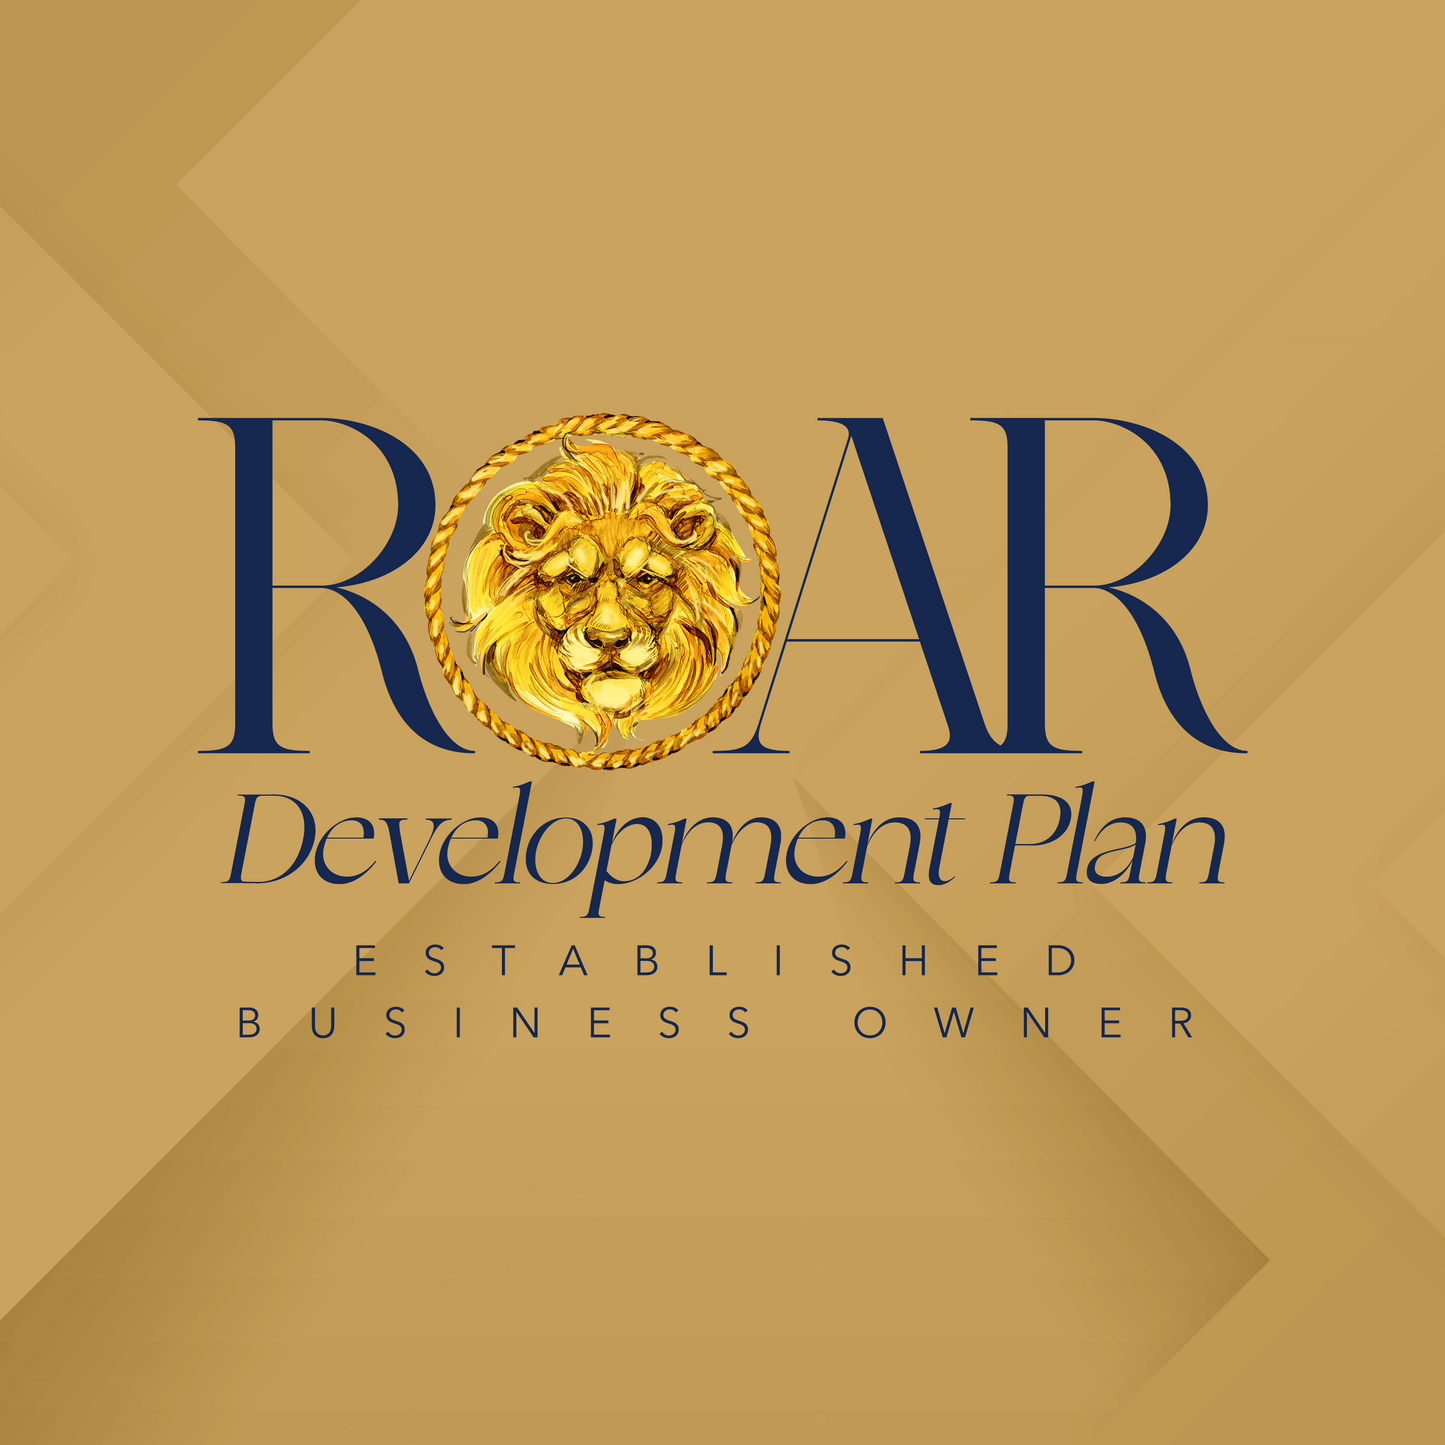 (Entrepreneur) ROAR Established Business Owner Professional Development Plan